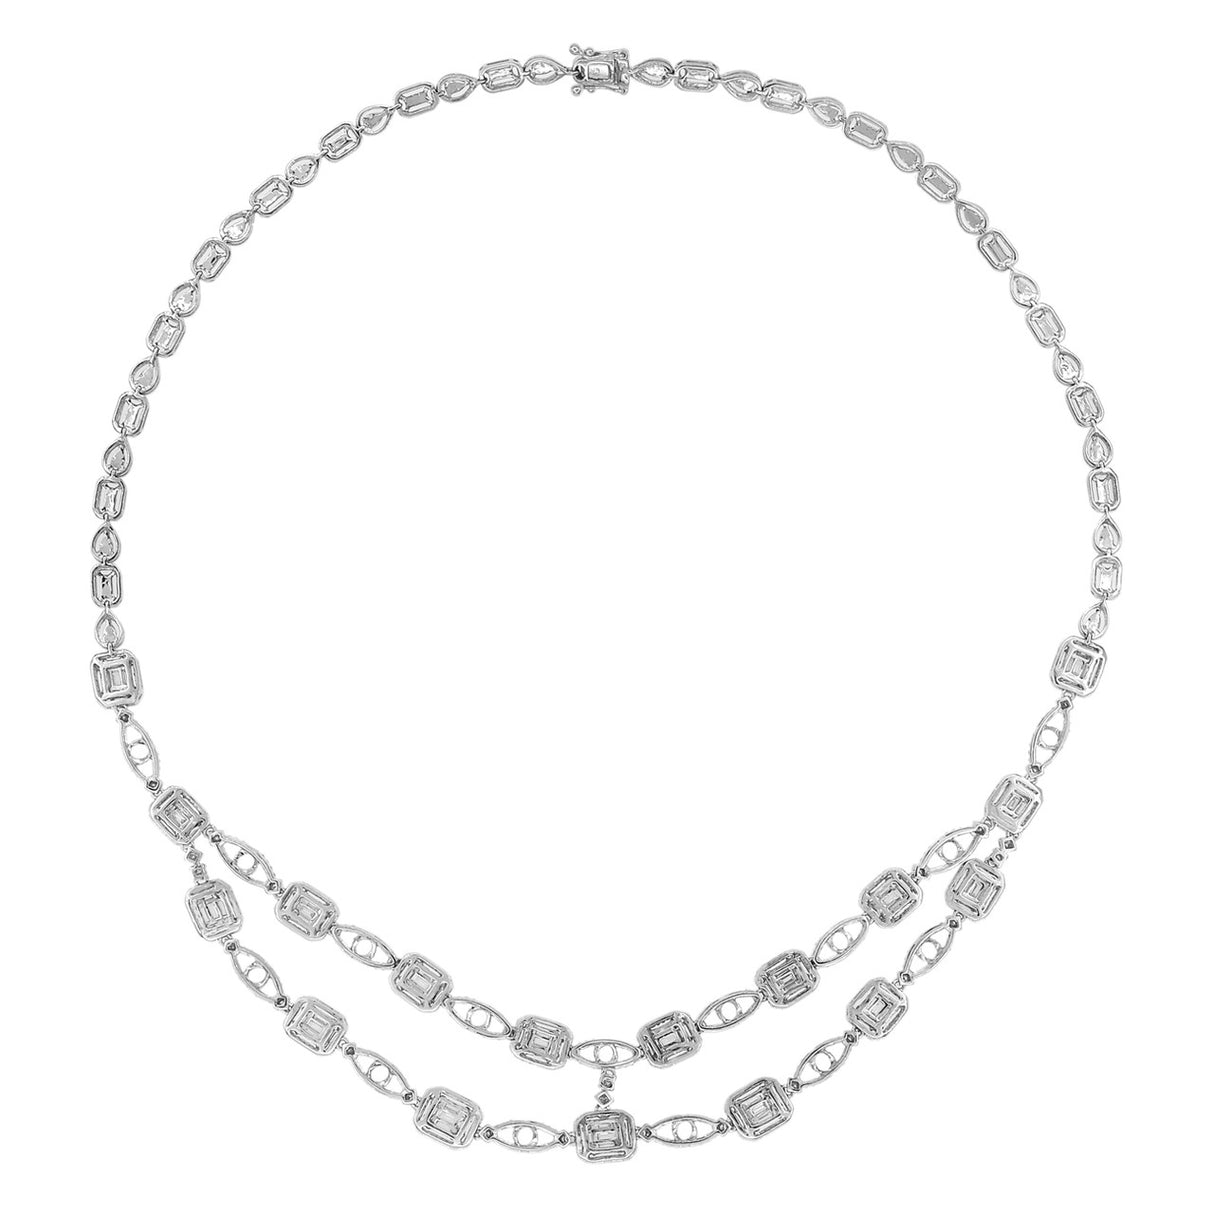 18K White Gold 7.46 Carat Diamond Necklace